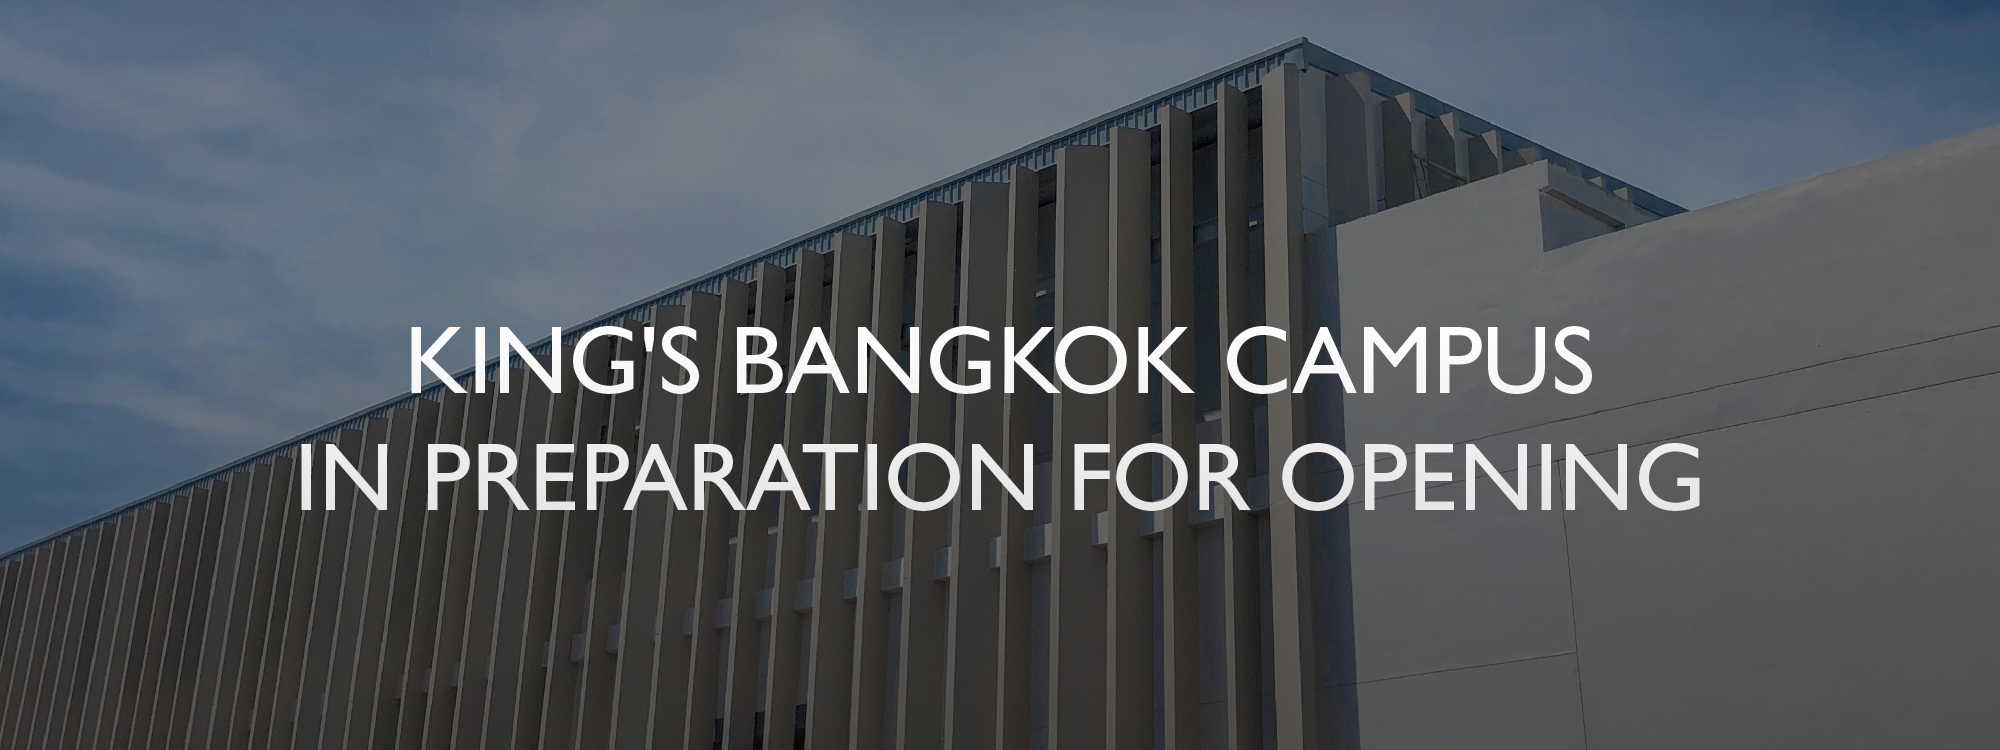 King's Bangkok campus in preparation for opening